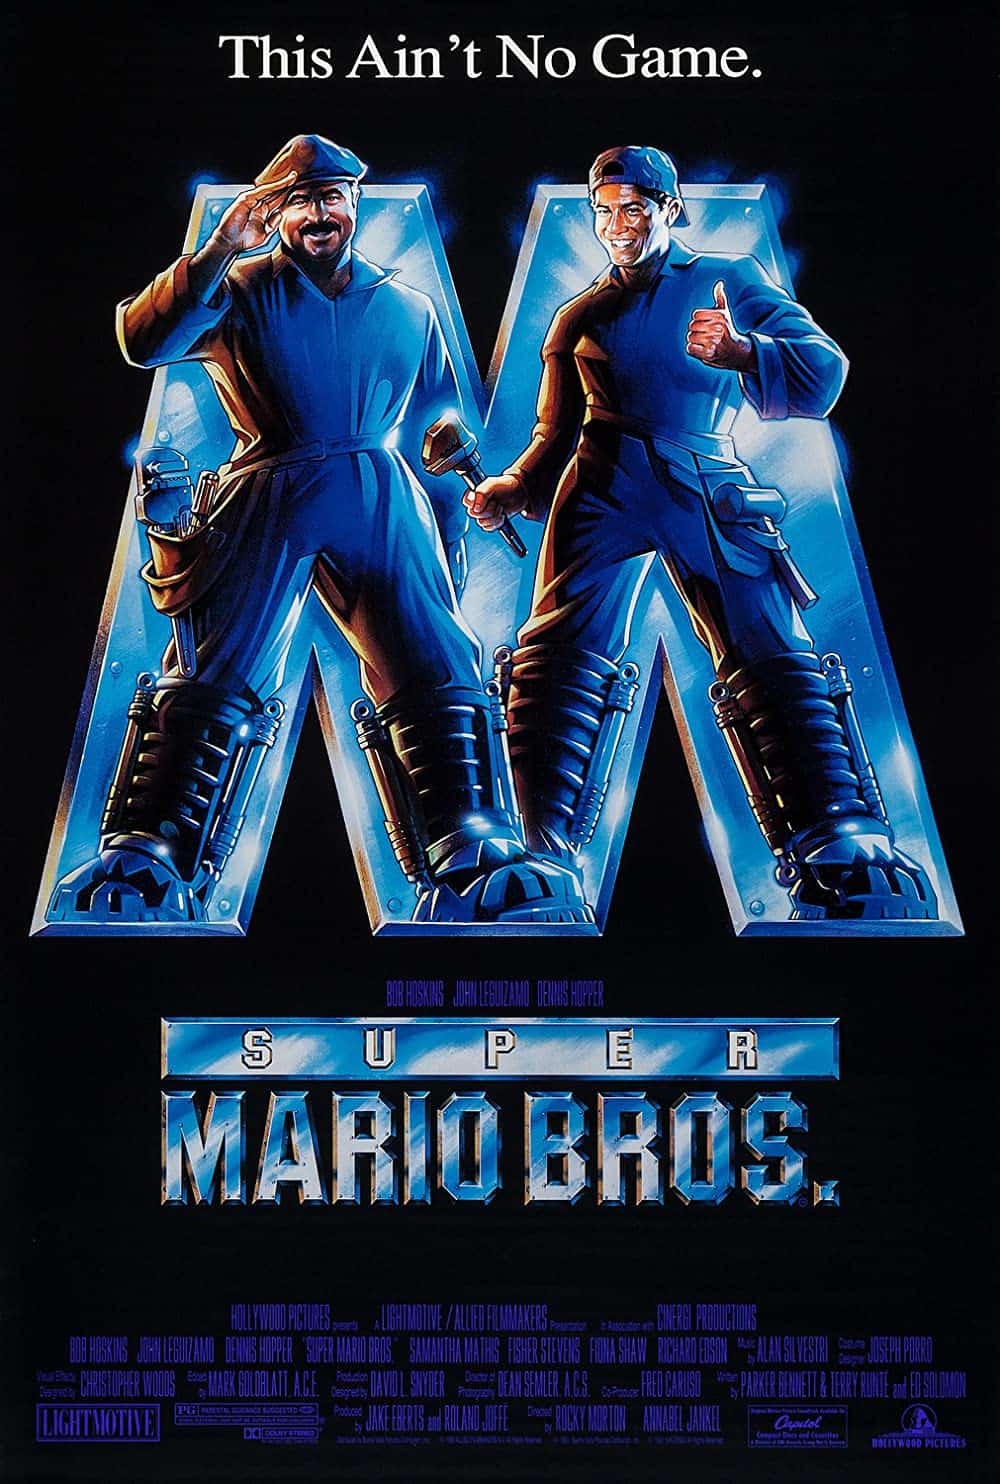 new movie like Free Guy Super Mario Bros. (1993)